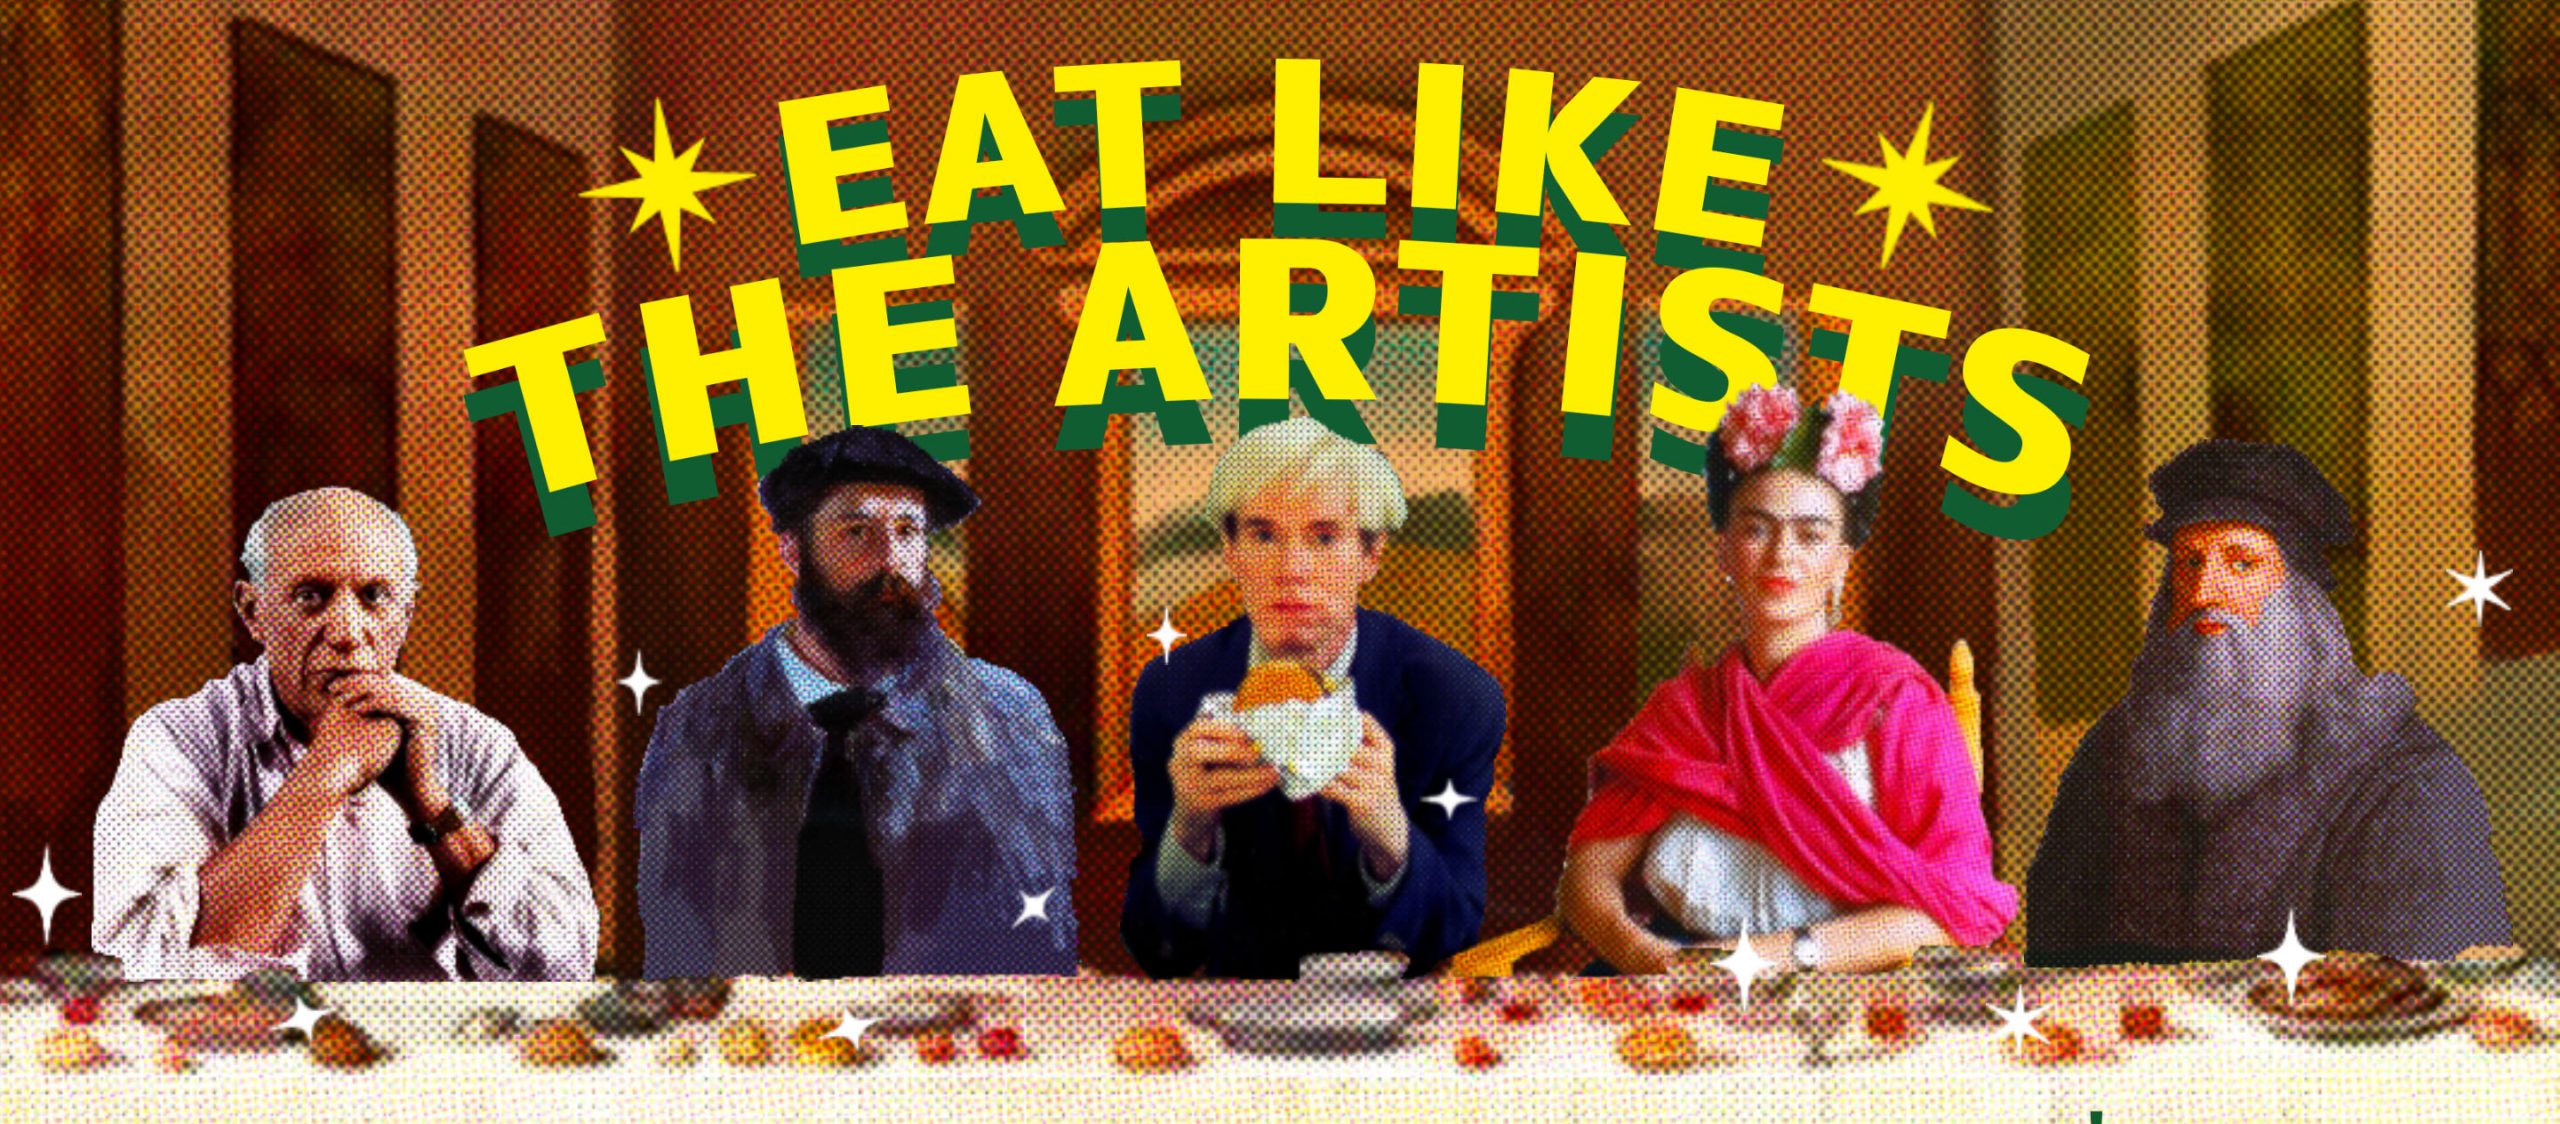 Eat like artists ‘ทาร์ตแอปเปิลจากสวนหลังบ้าน ข้าวอบหญ้าฝรั่น สตูว์ปลาไหล’ ศิลปินระดับโลกกินอะไรในแต่ละมื้อ